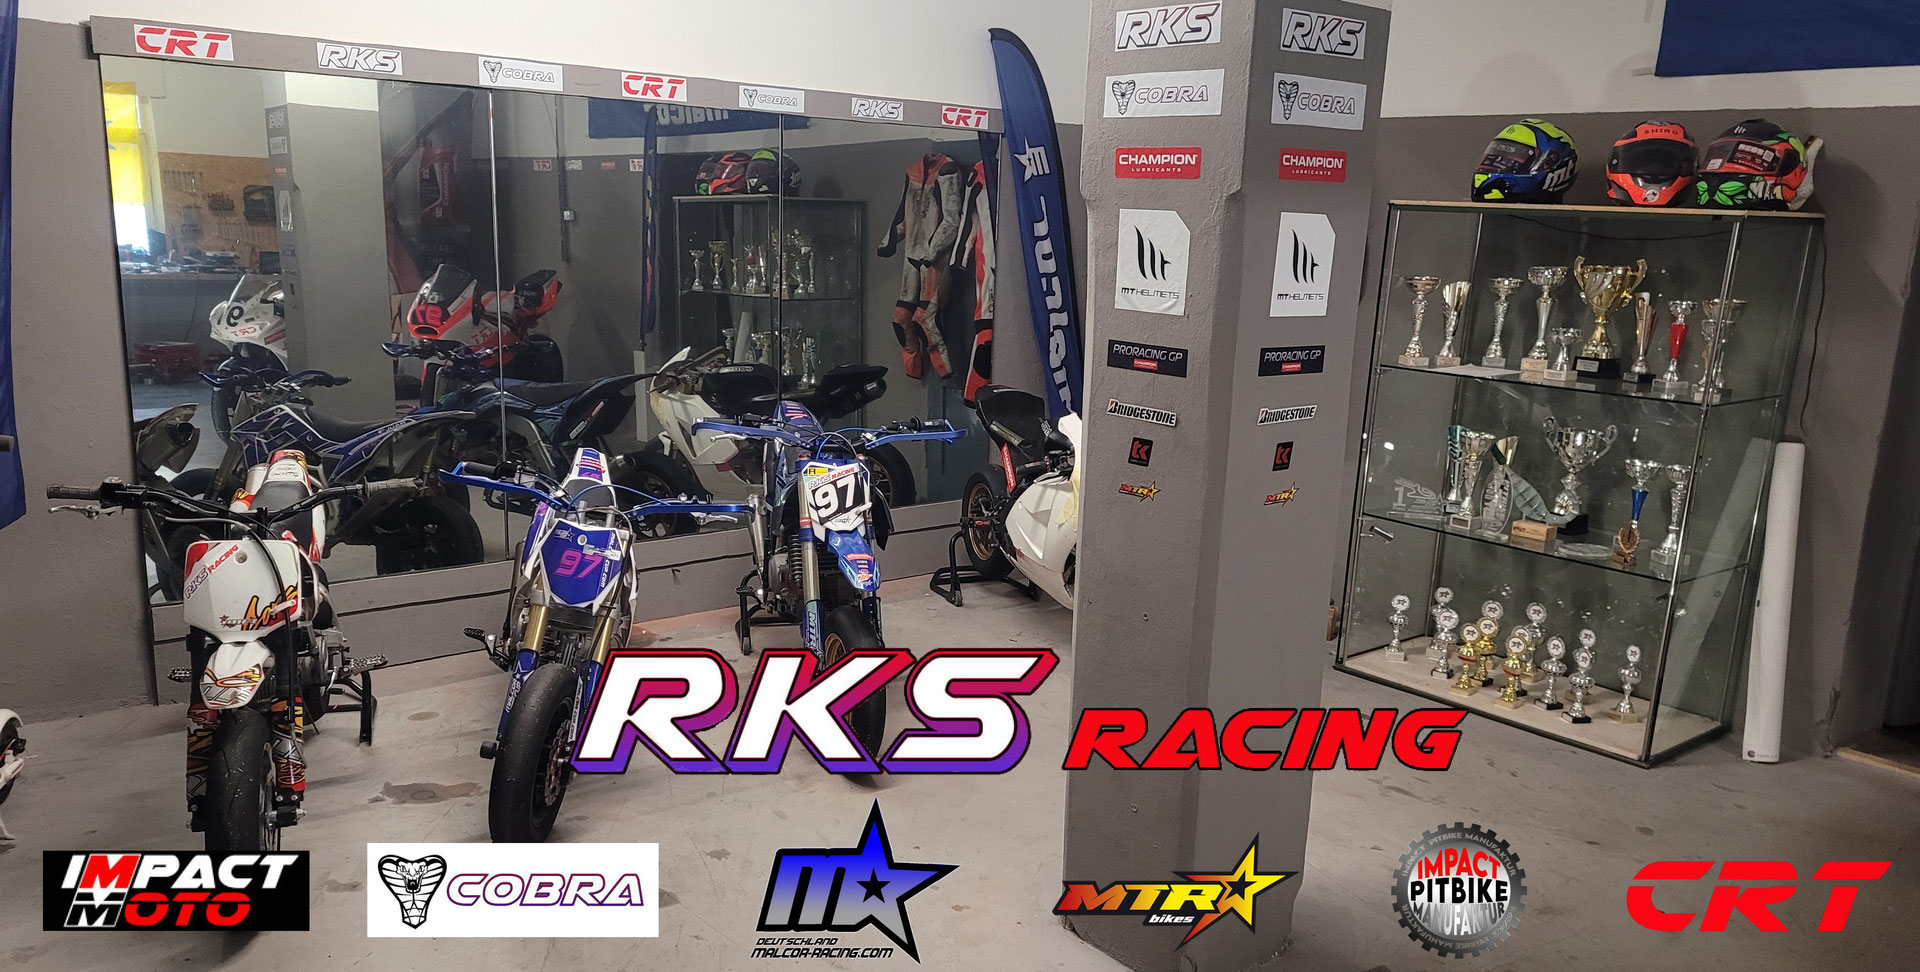 (c) Rks-racing.com